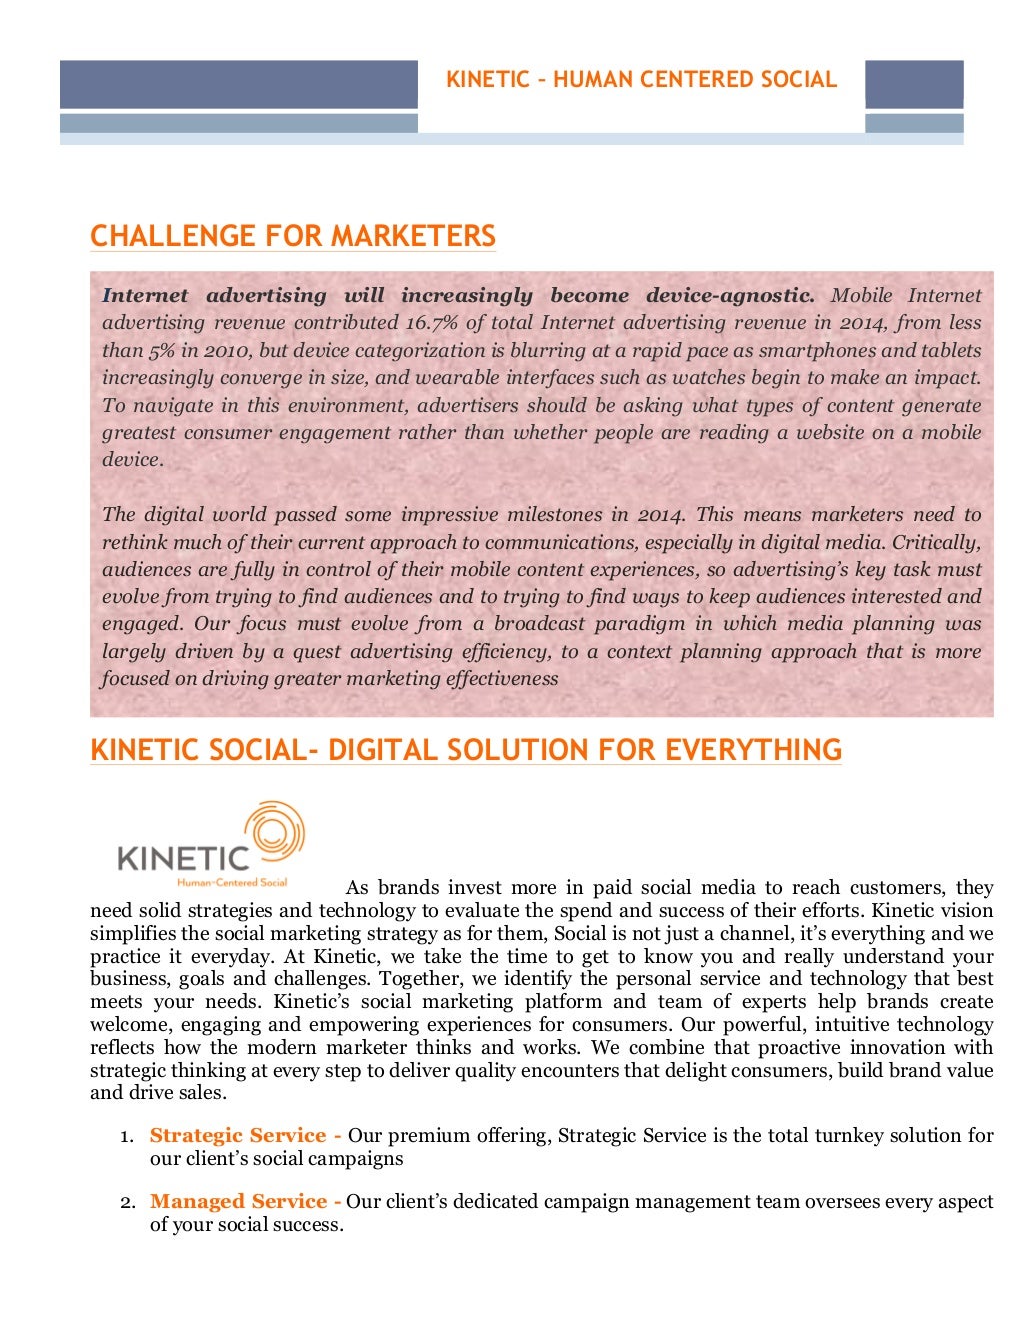 cdk digital marketing case study solution slideshare